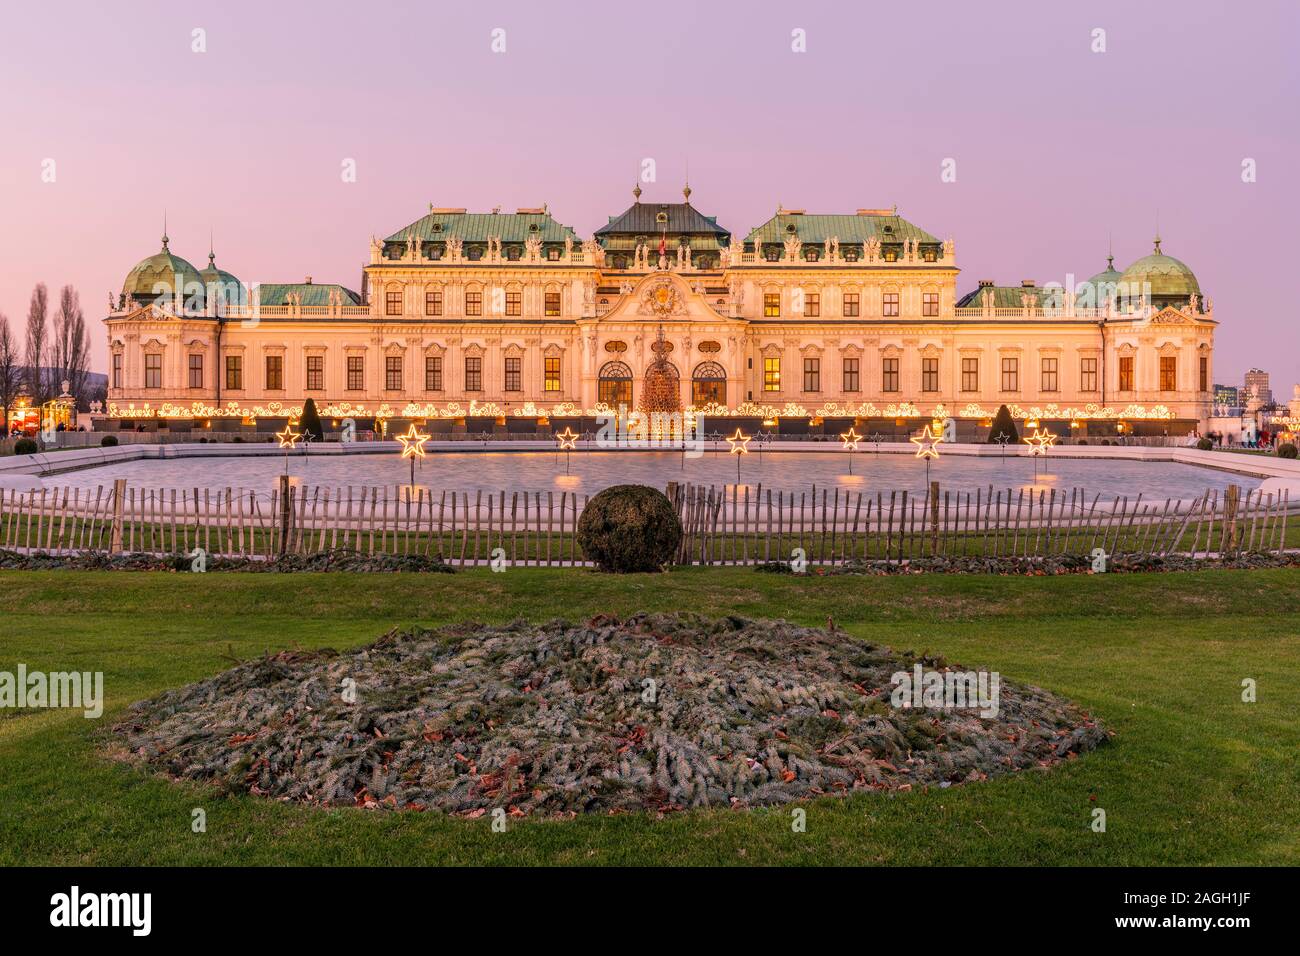 Christmas lights, Upper Belvedere Palace, Vienna, Austria Stock Photo